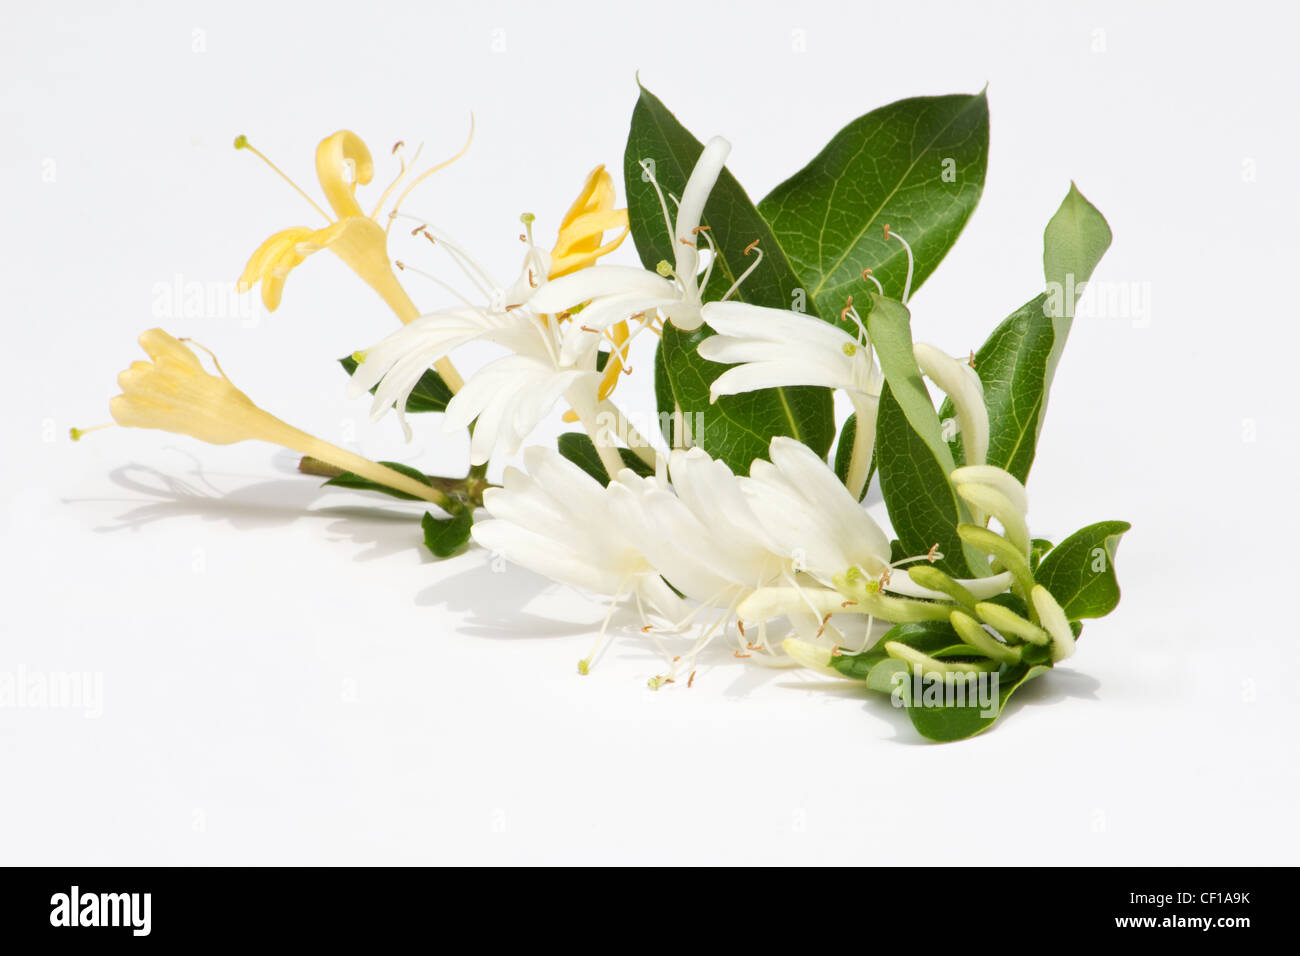 Honeysuckle (Lonicera japonica ) flowers on white background Stock Photo